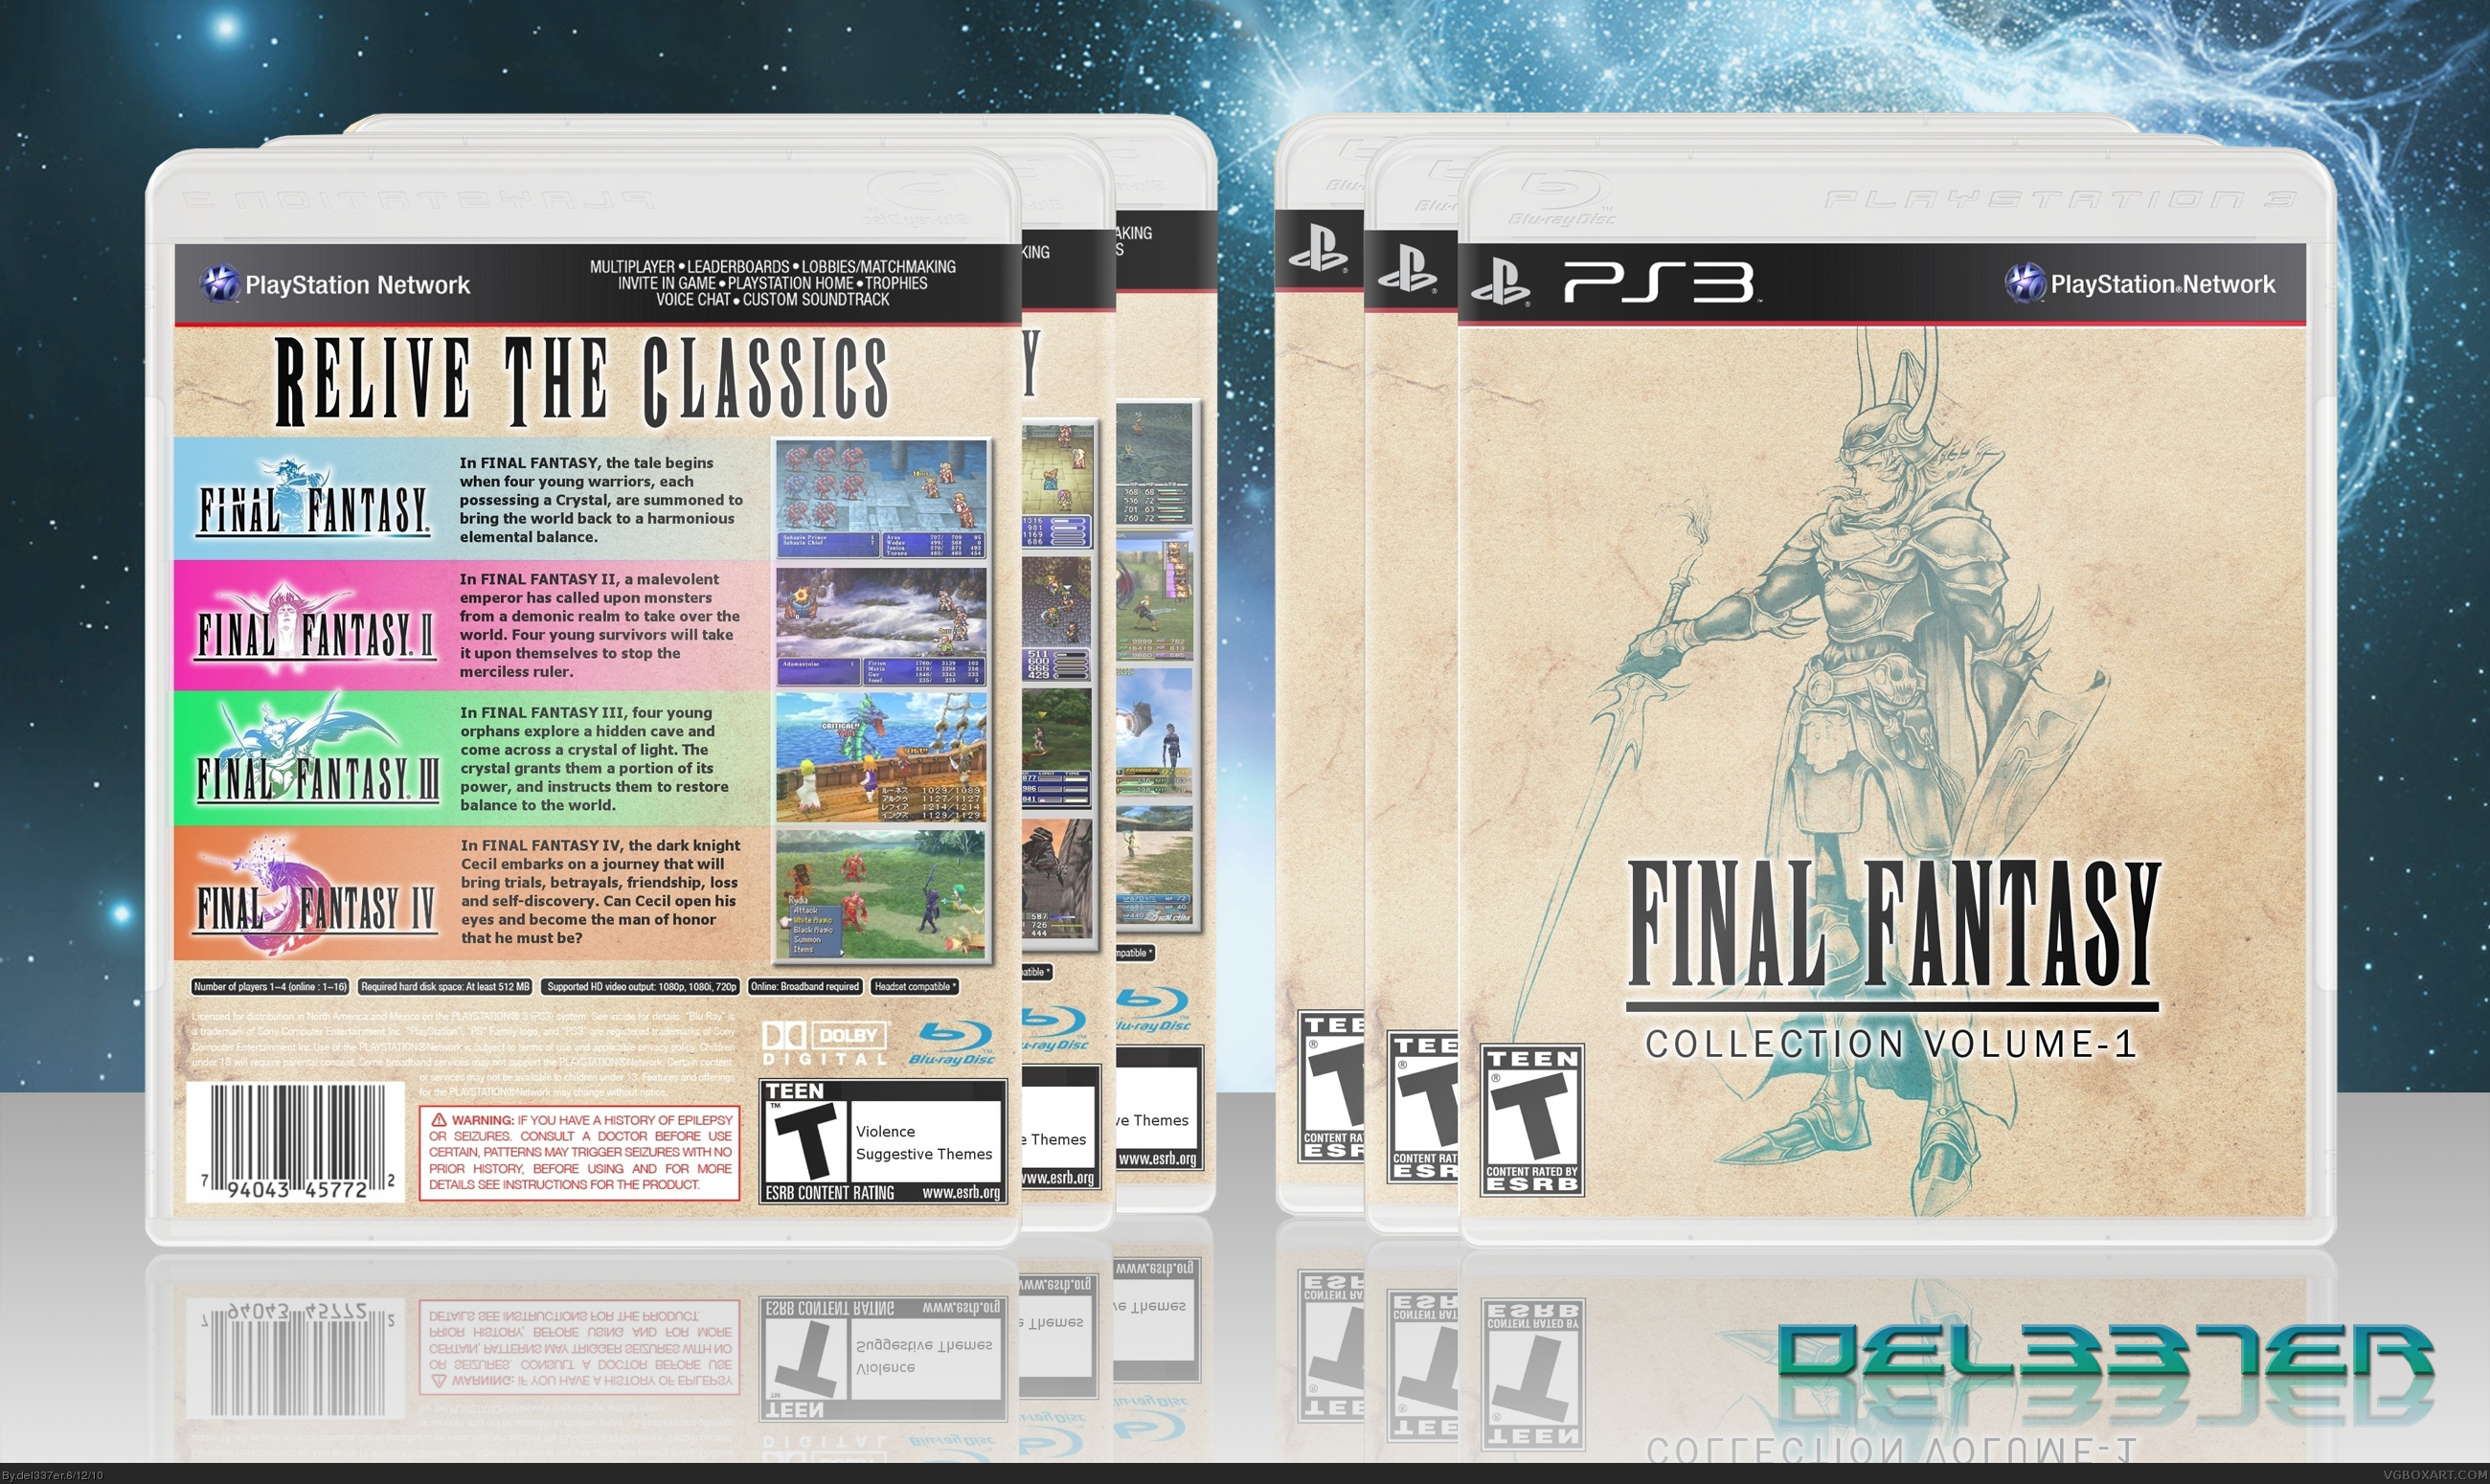 Final Fantasy Collection box cover